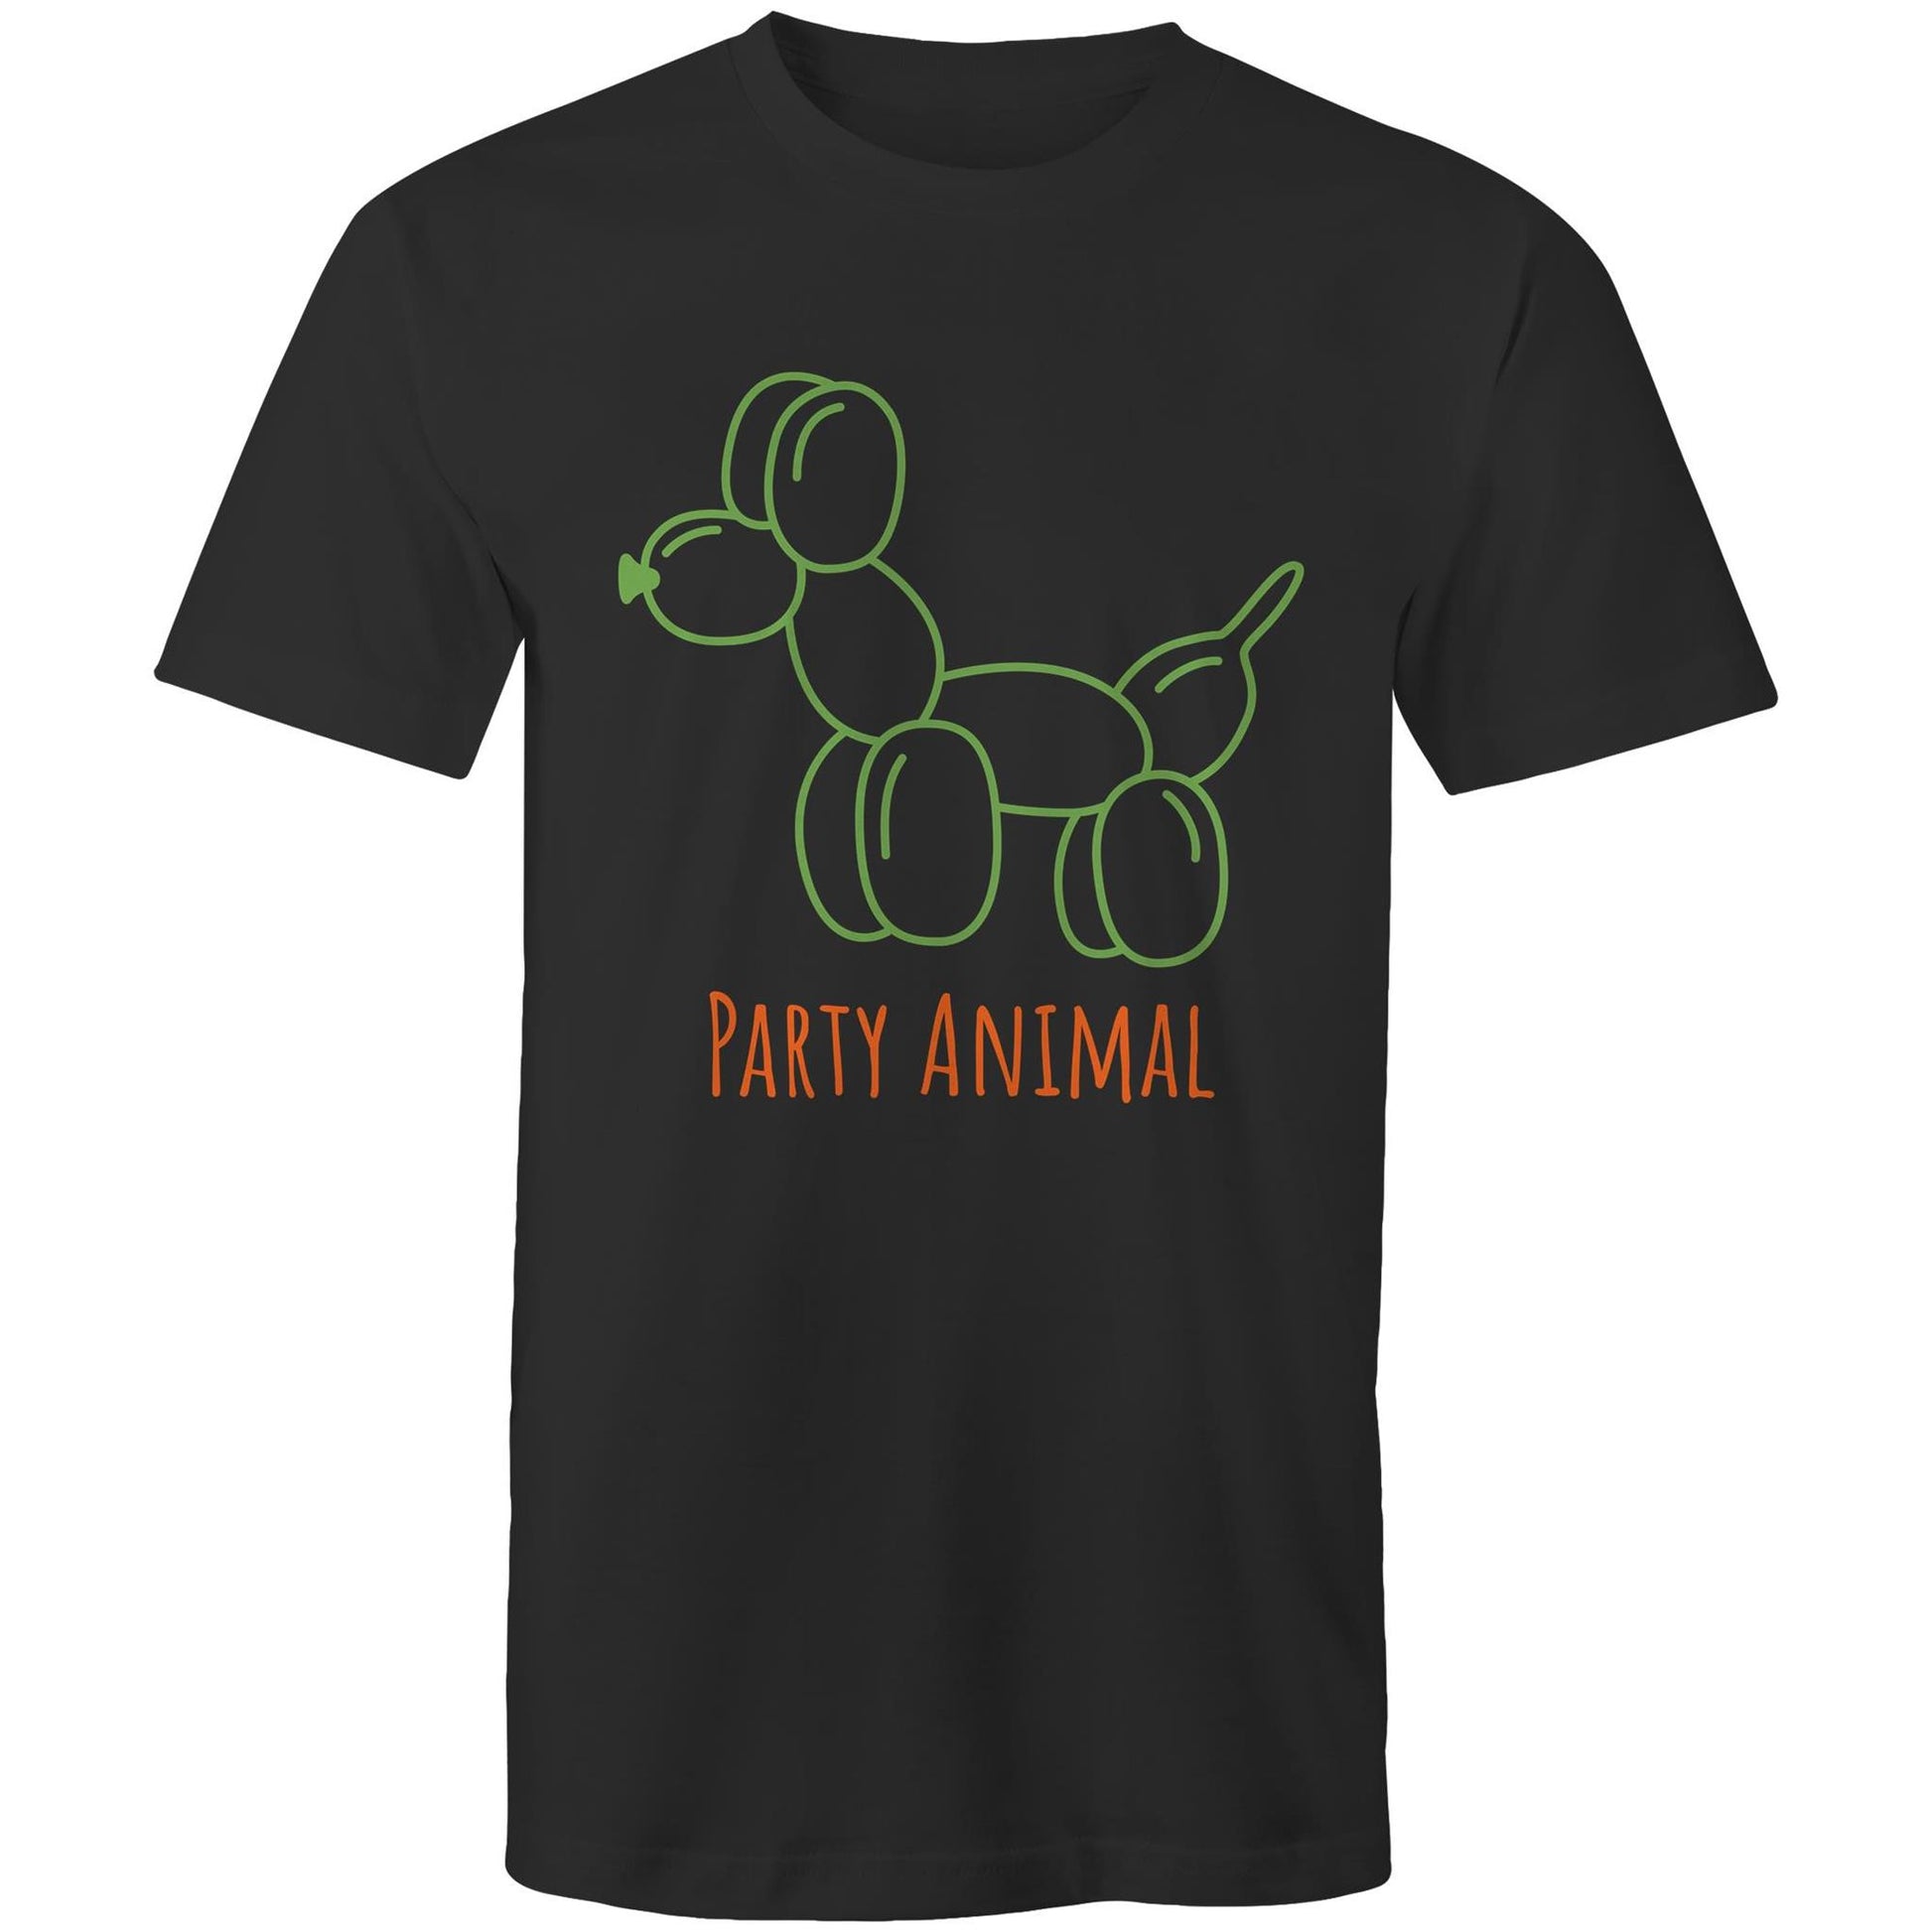 Party Animal - Mens T-Shirt Black Mens T-shirt animal Funny Mens